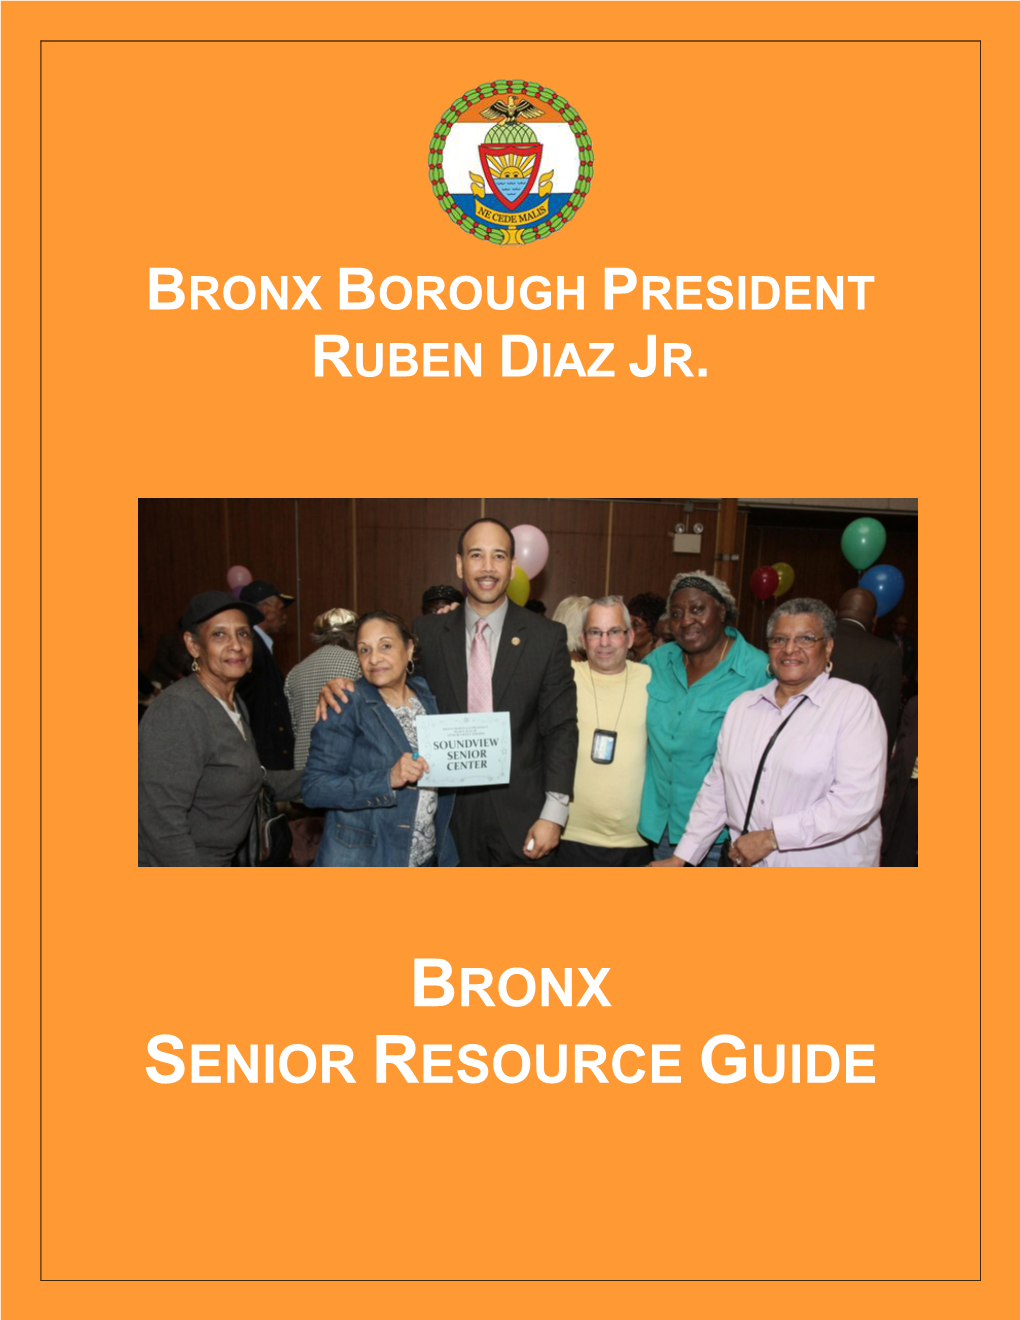 Bronx Senior Resource Guide | Bronx Borough President Ruben Diaz